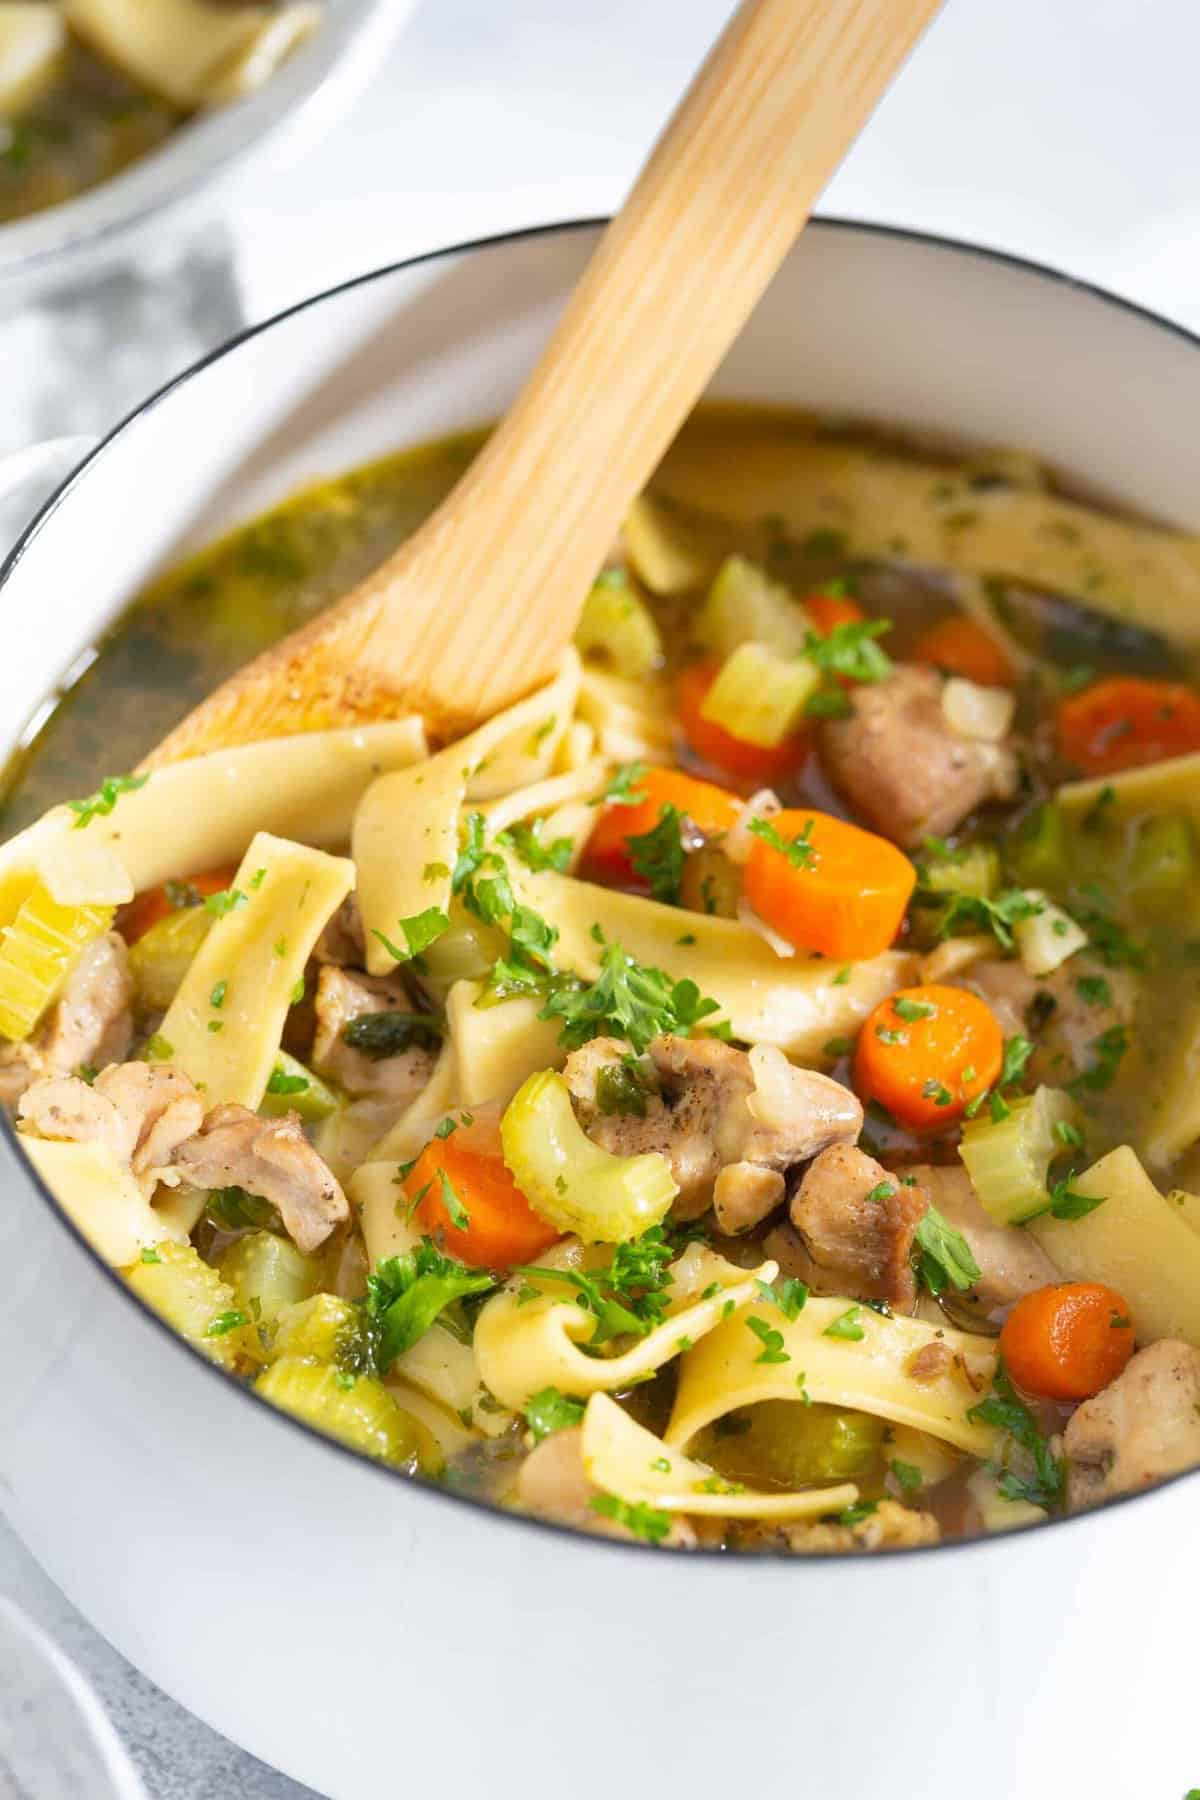 https://www.tablefortwoblog.com/wp-content/uploads/2019/07/best-chicken-noodle-soup-recipe-photos-tablefortwoblog-5-scaled.jpg